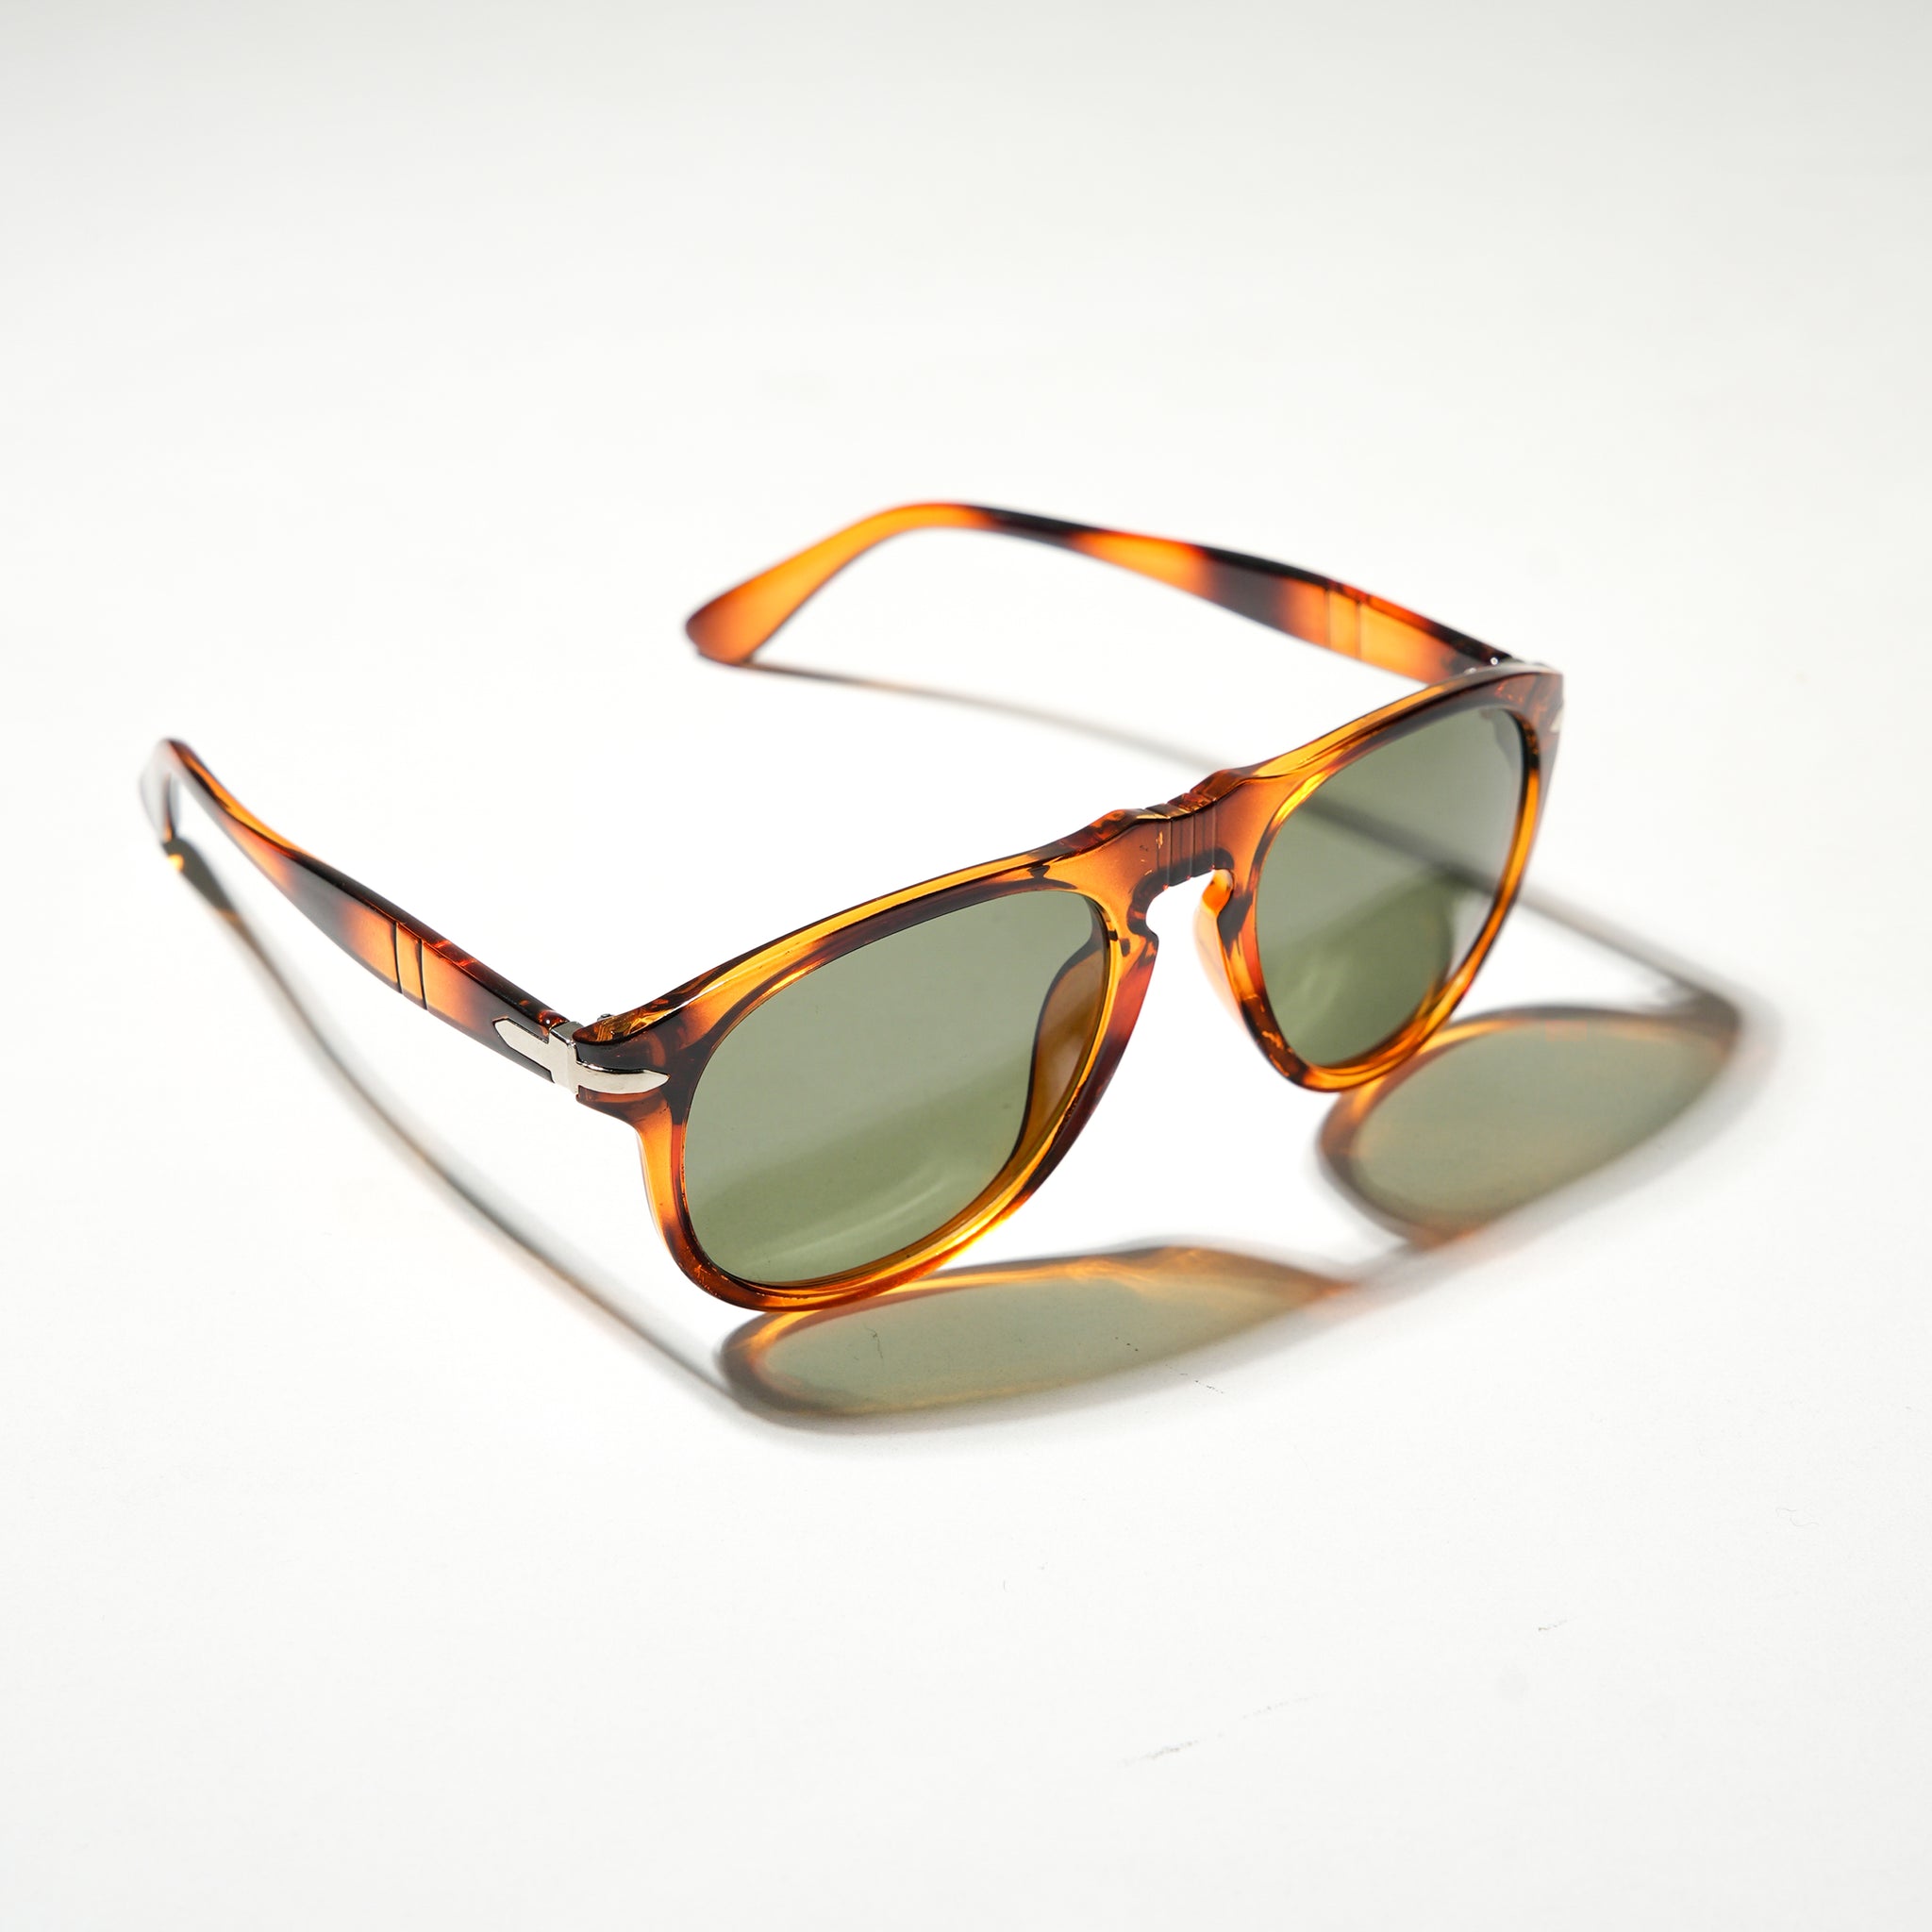 Chokore Steve Style Polarized Sunglasses (Brown)